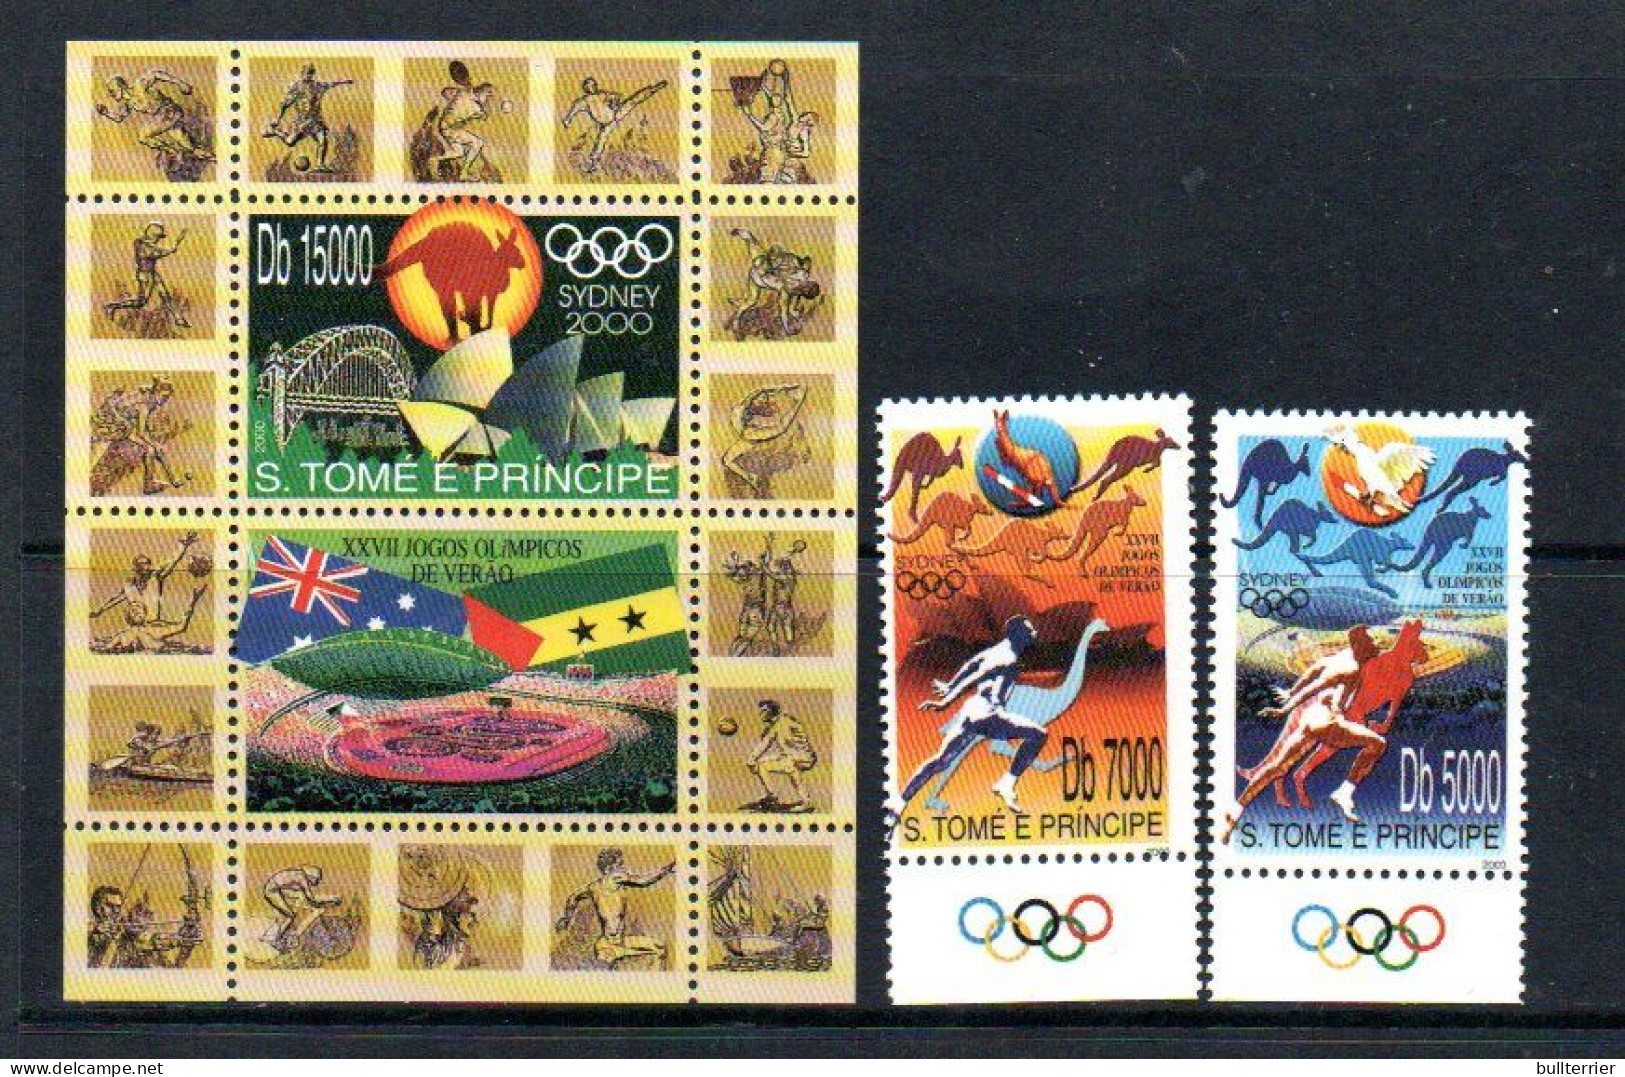 OLYMPICS -  ST HOMAS PRINCE -  2000-Sydney Olympics Set Of 2 + S/sheet  Mint Never Hinged - Estate 2000: Sydney